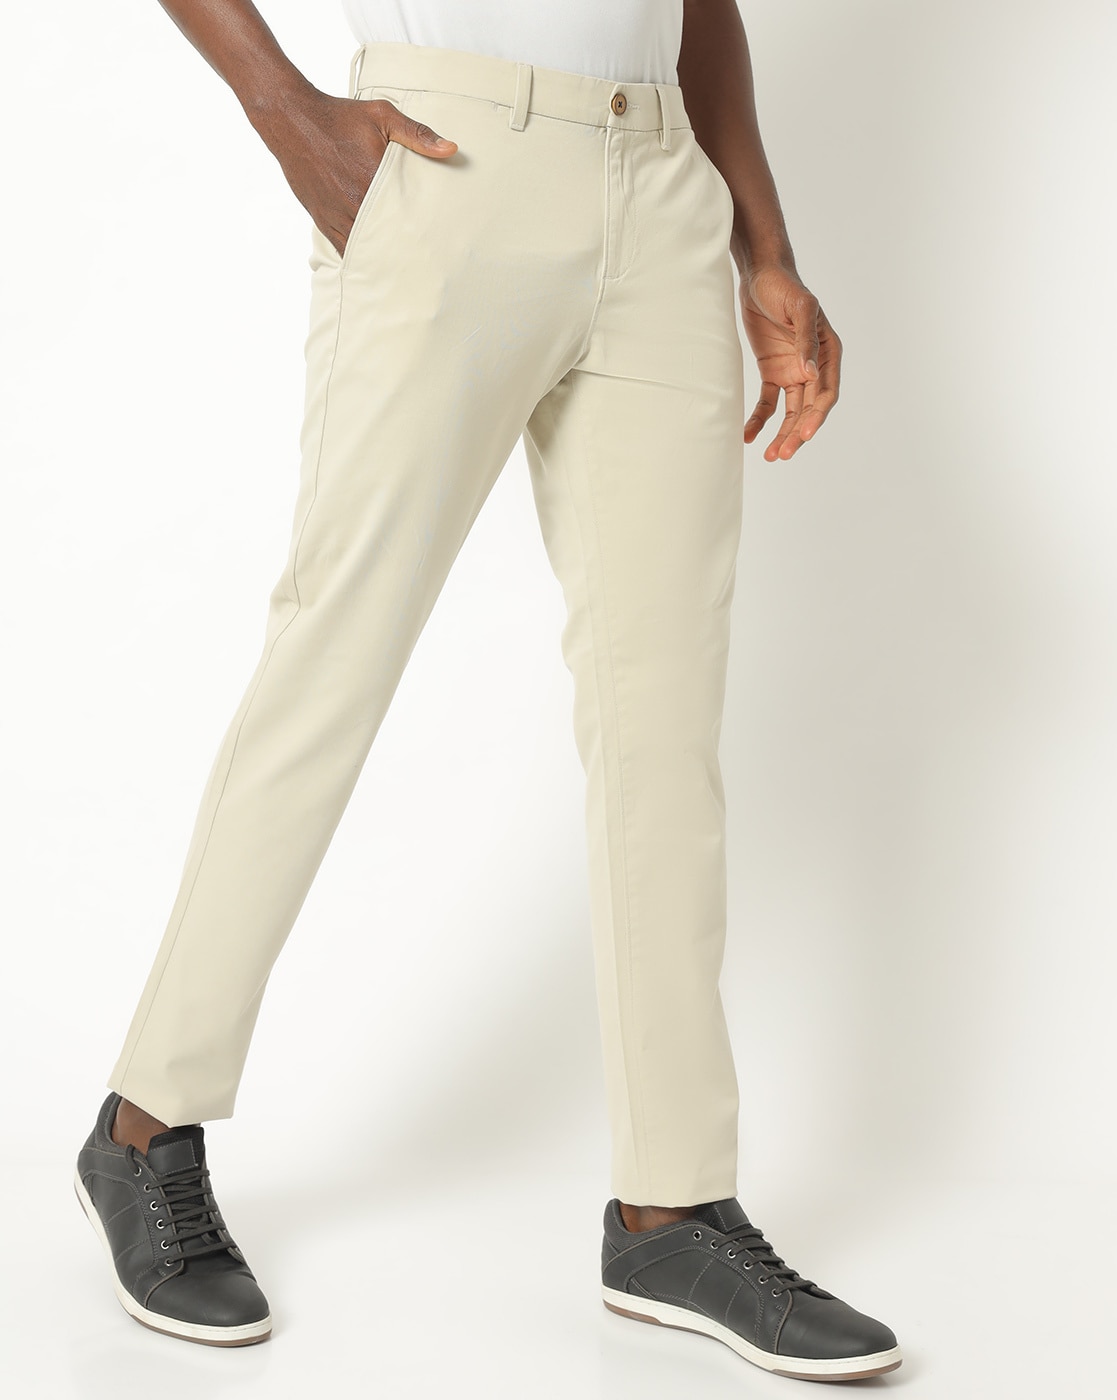 Jeans & Pants | NETPLAY Pants (Men's) | Freeup